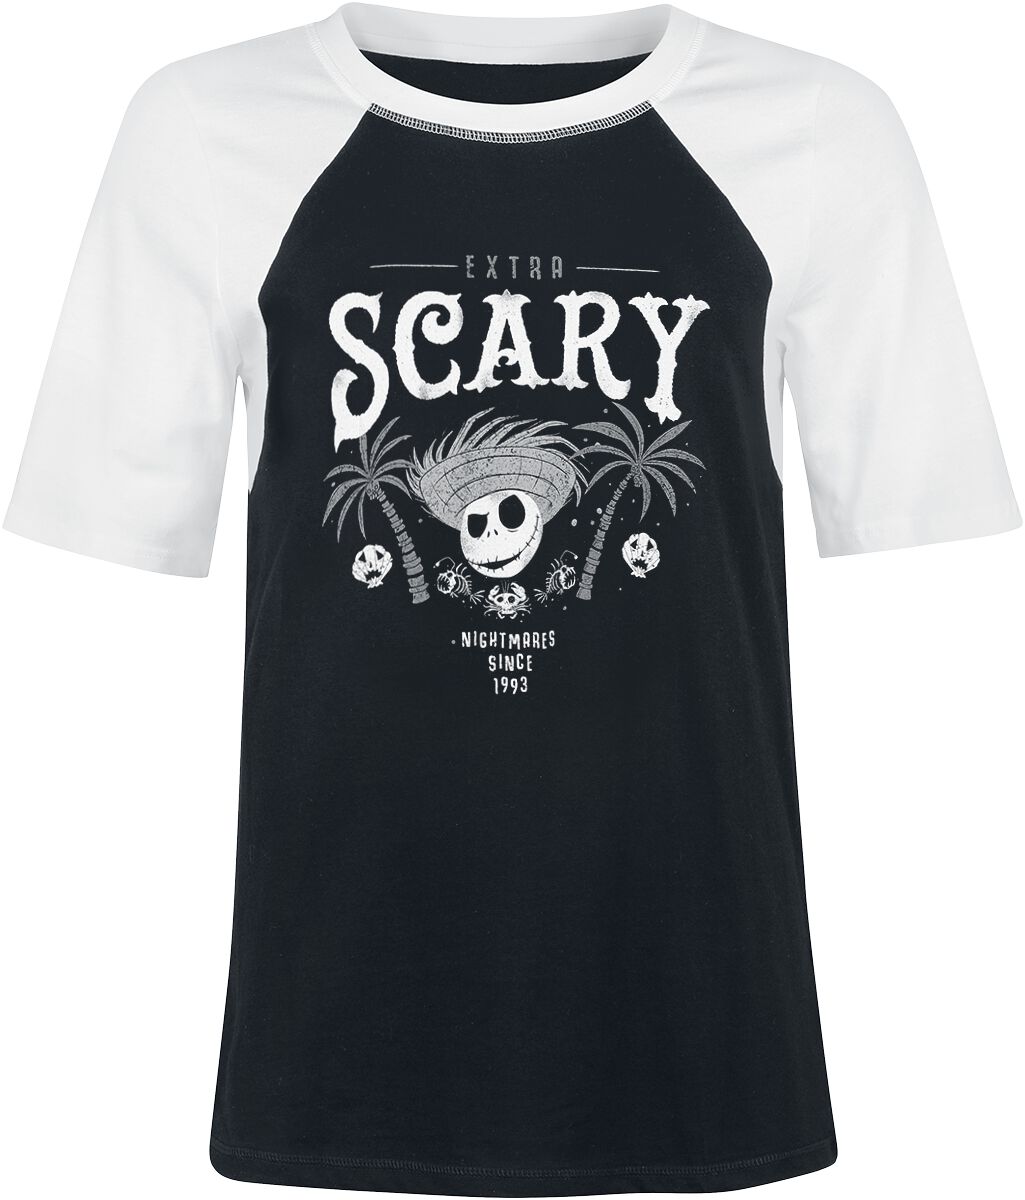 Scary T-Shirt schwarz von The Nightmare Before Christmas